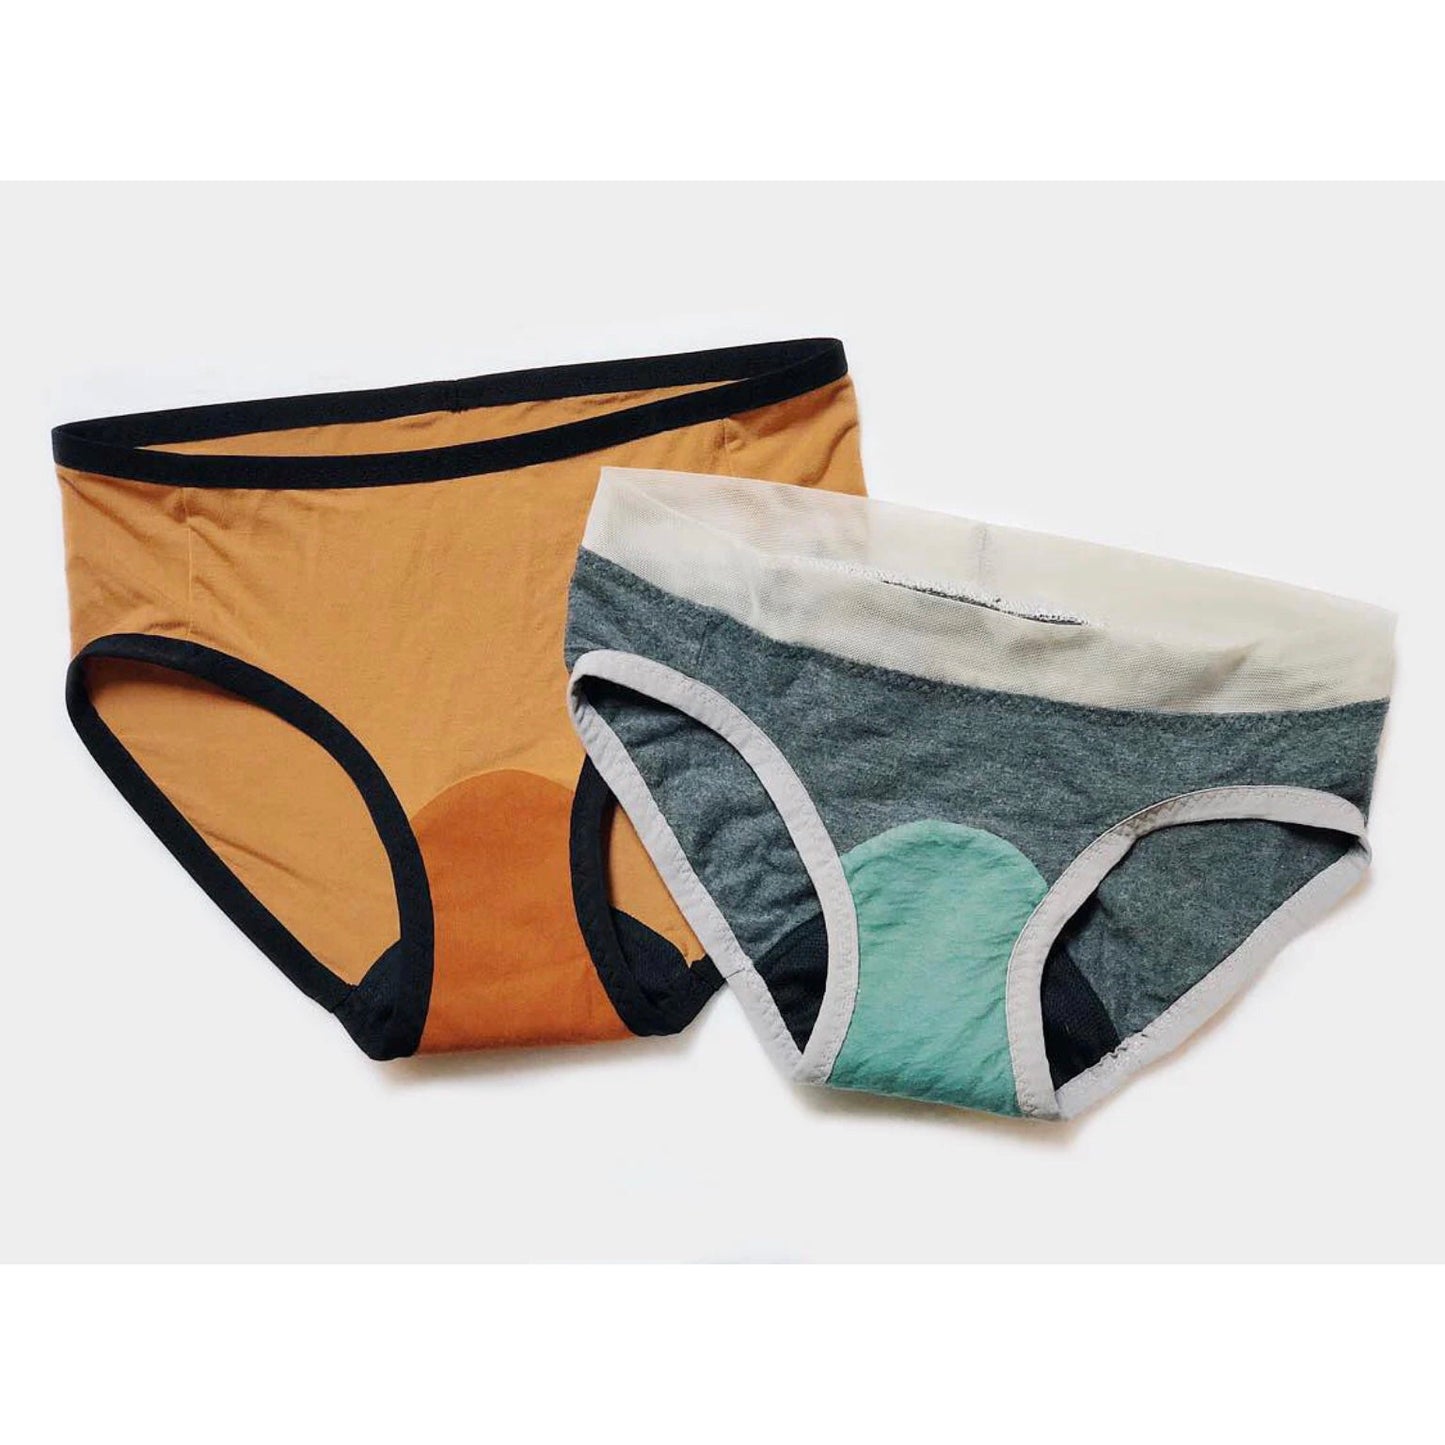 Custom Period Panty Sewing Kit® Bundle